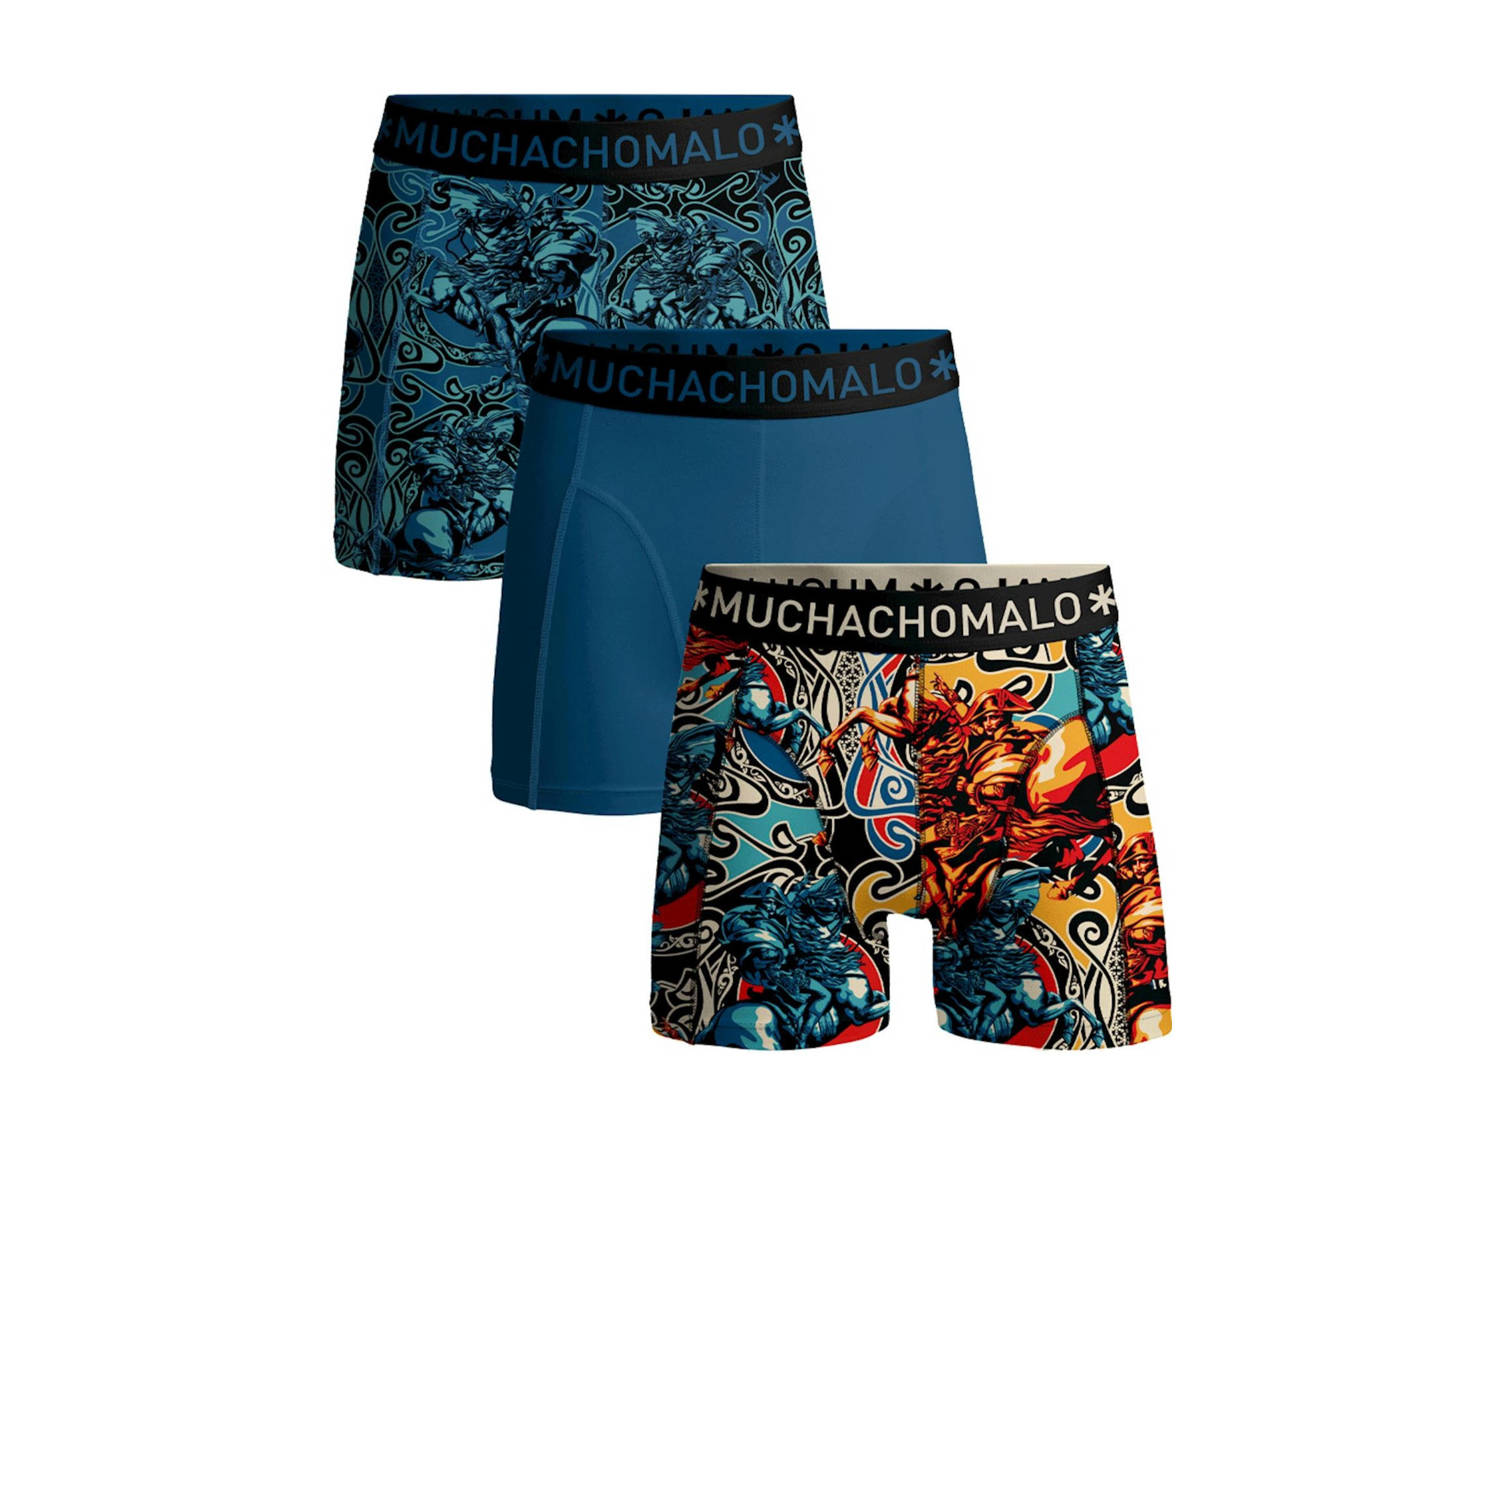 Muchachomalo boxershort ALPS set van 3 blauw multi